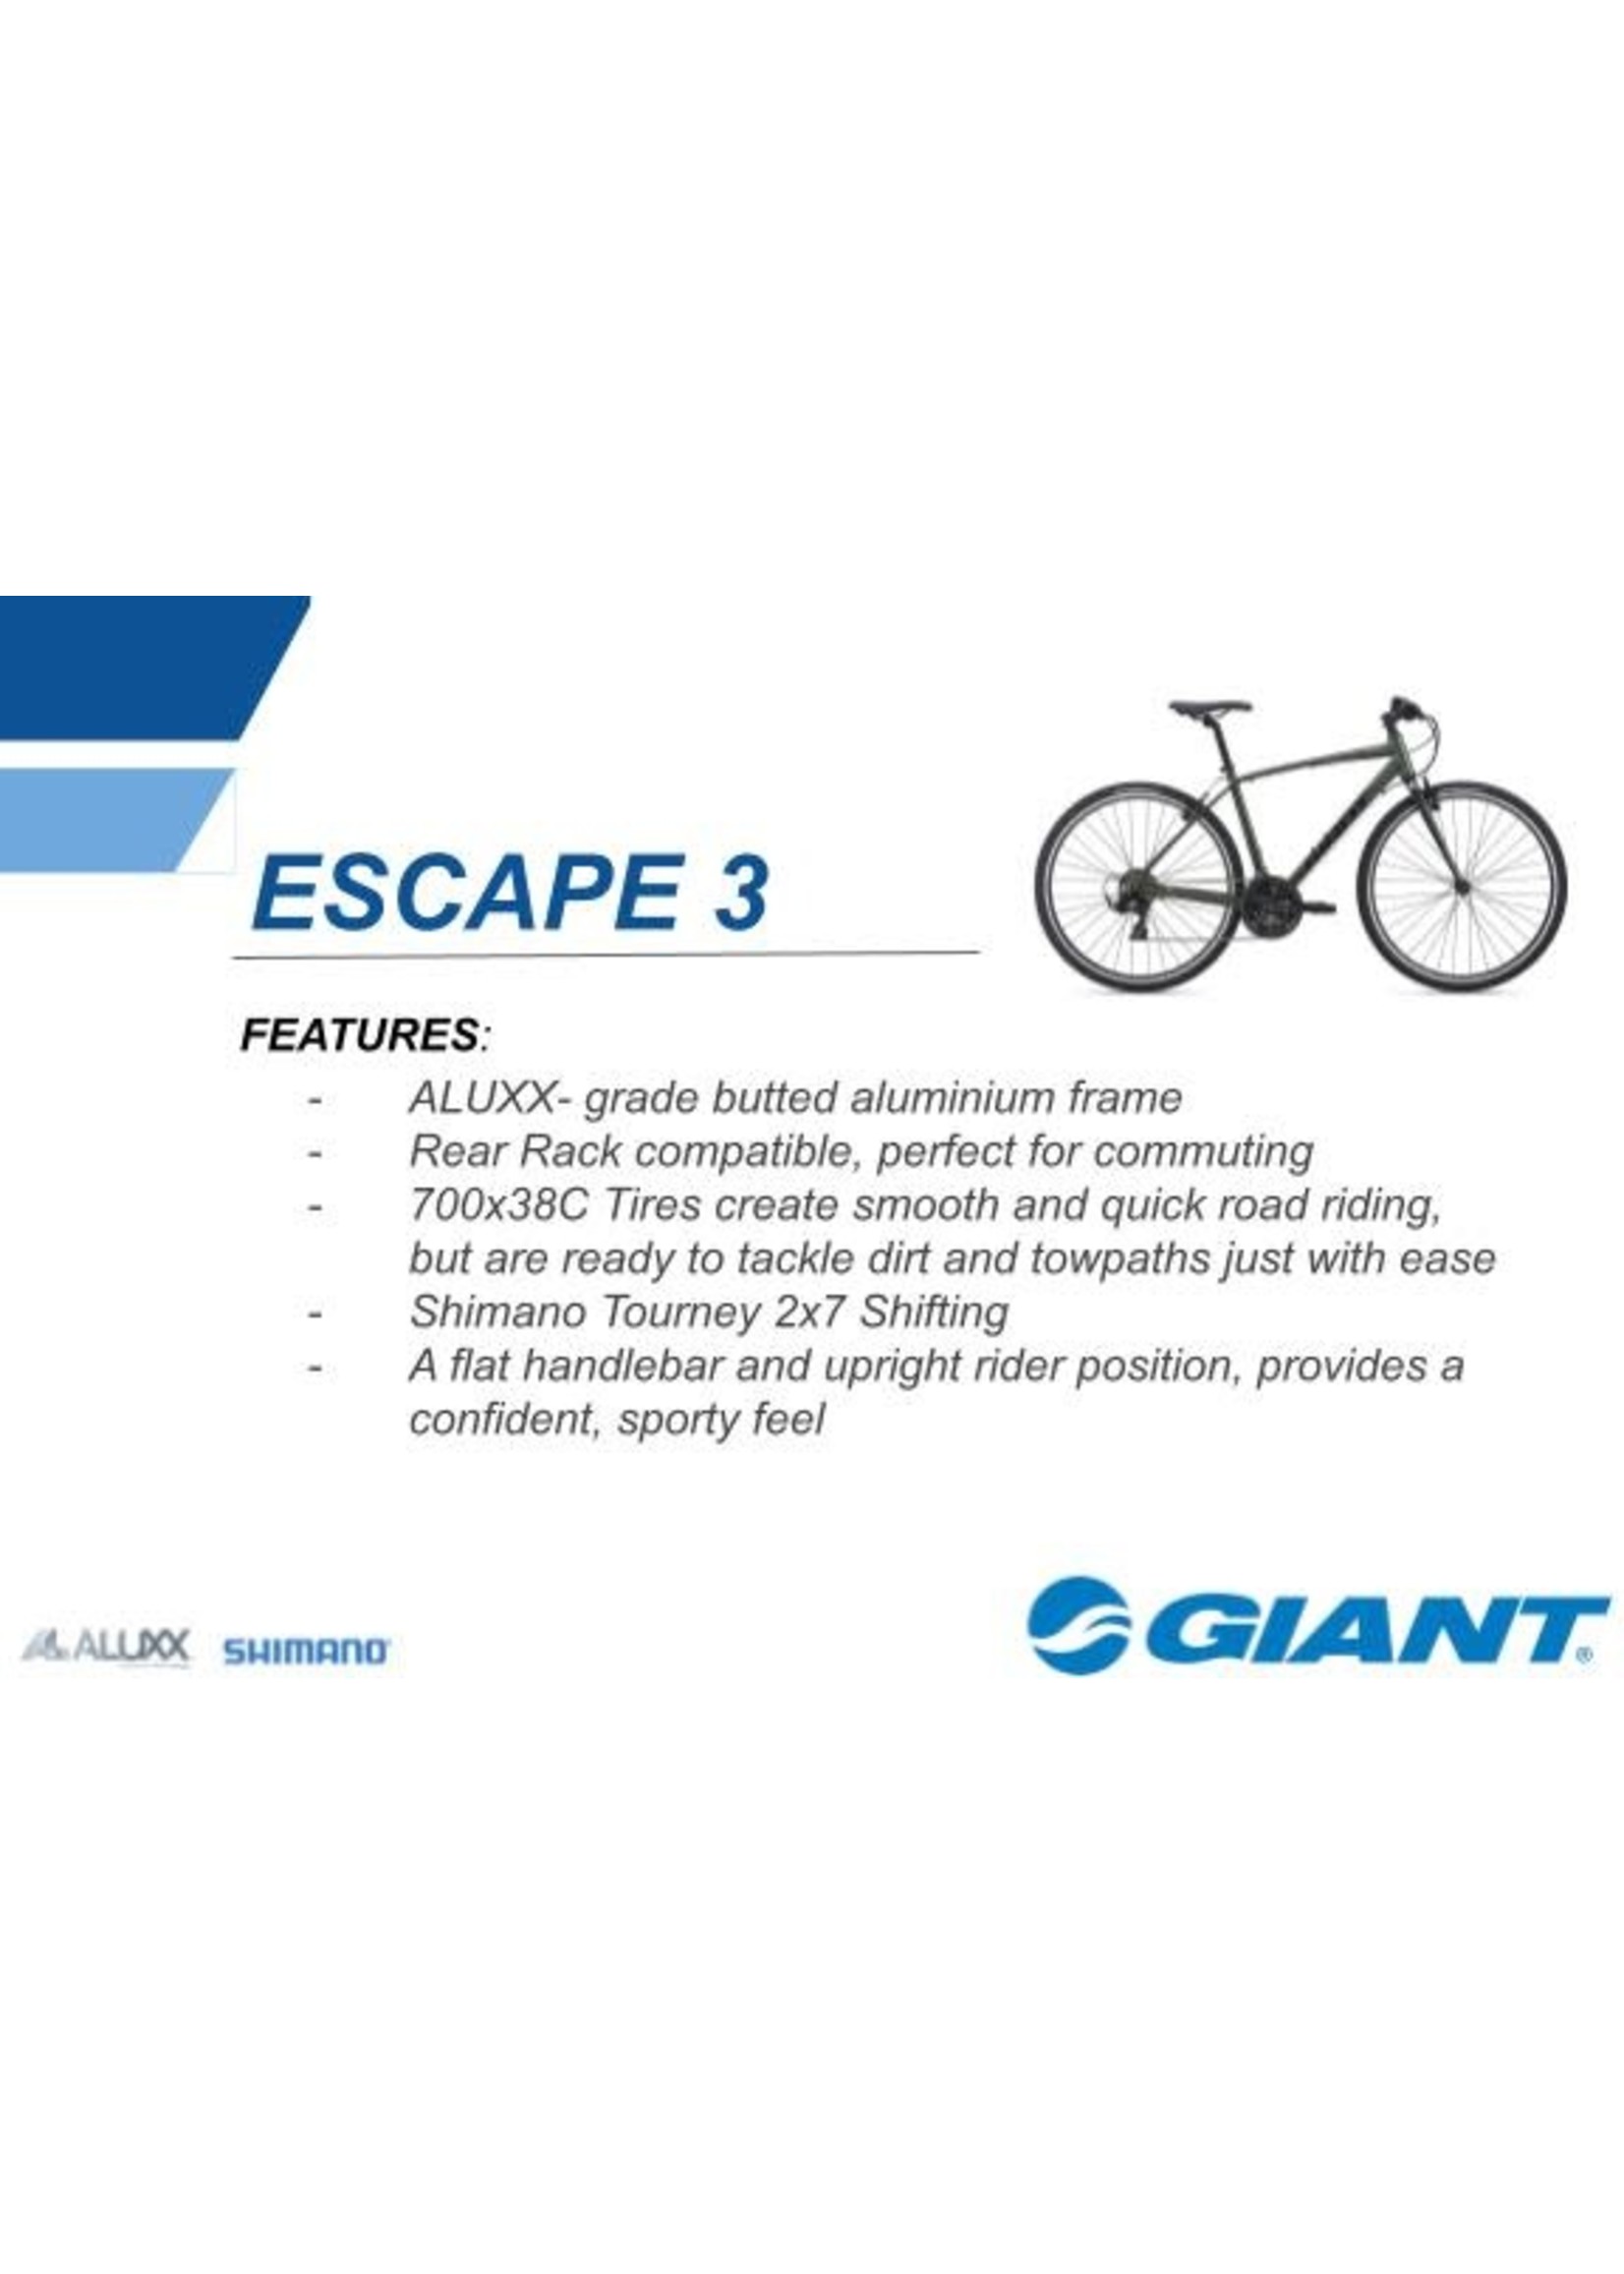 Giant Giant Escape 3